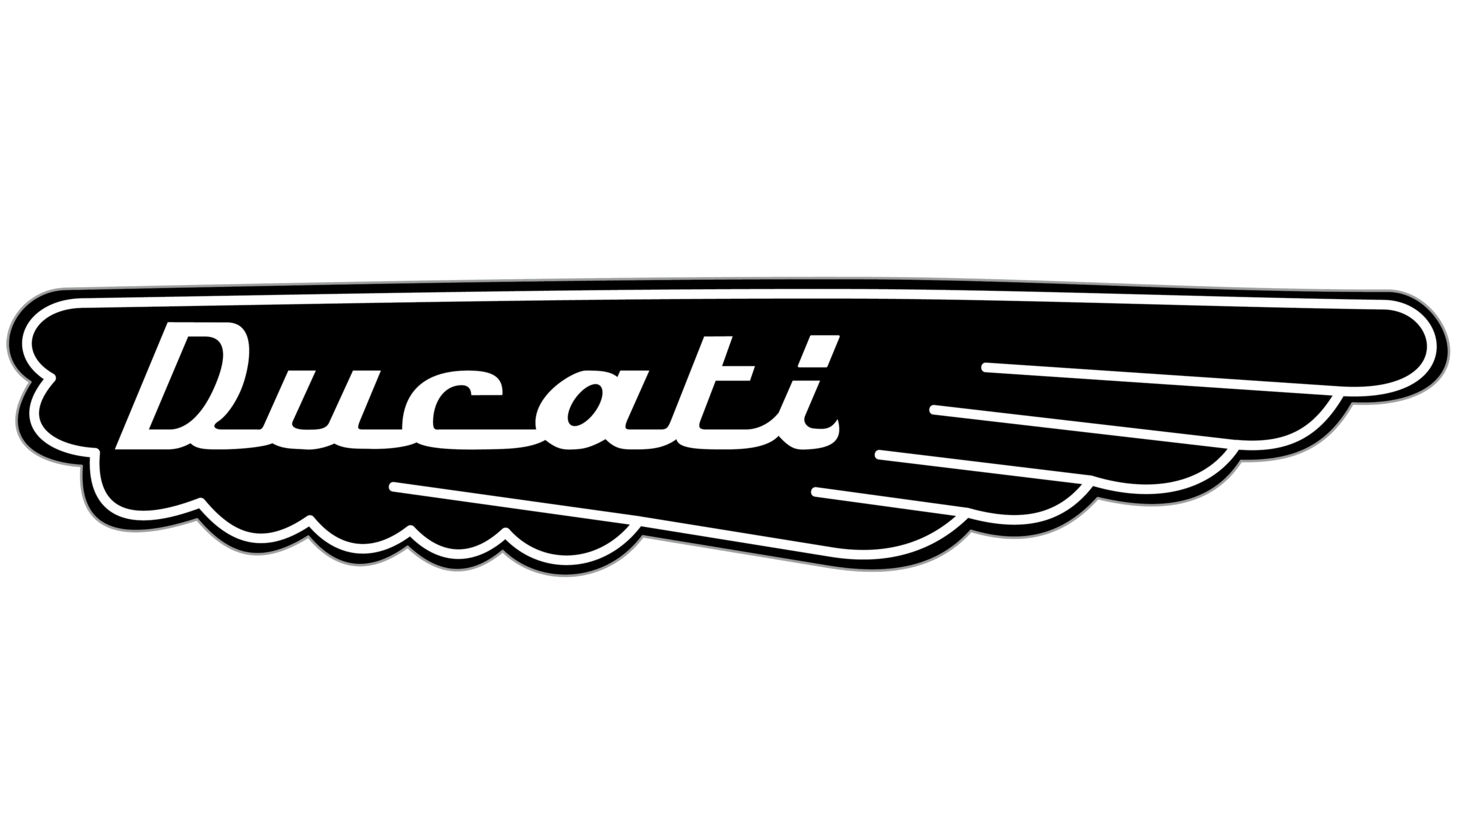 Ducati sign 1967 1977